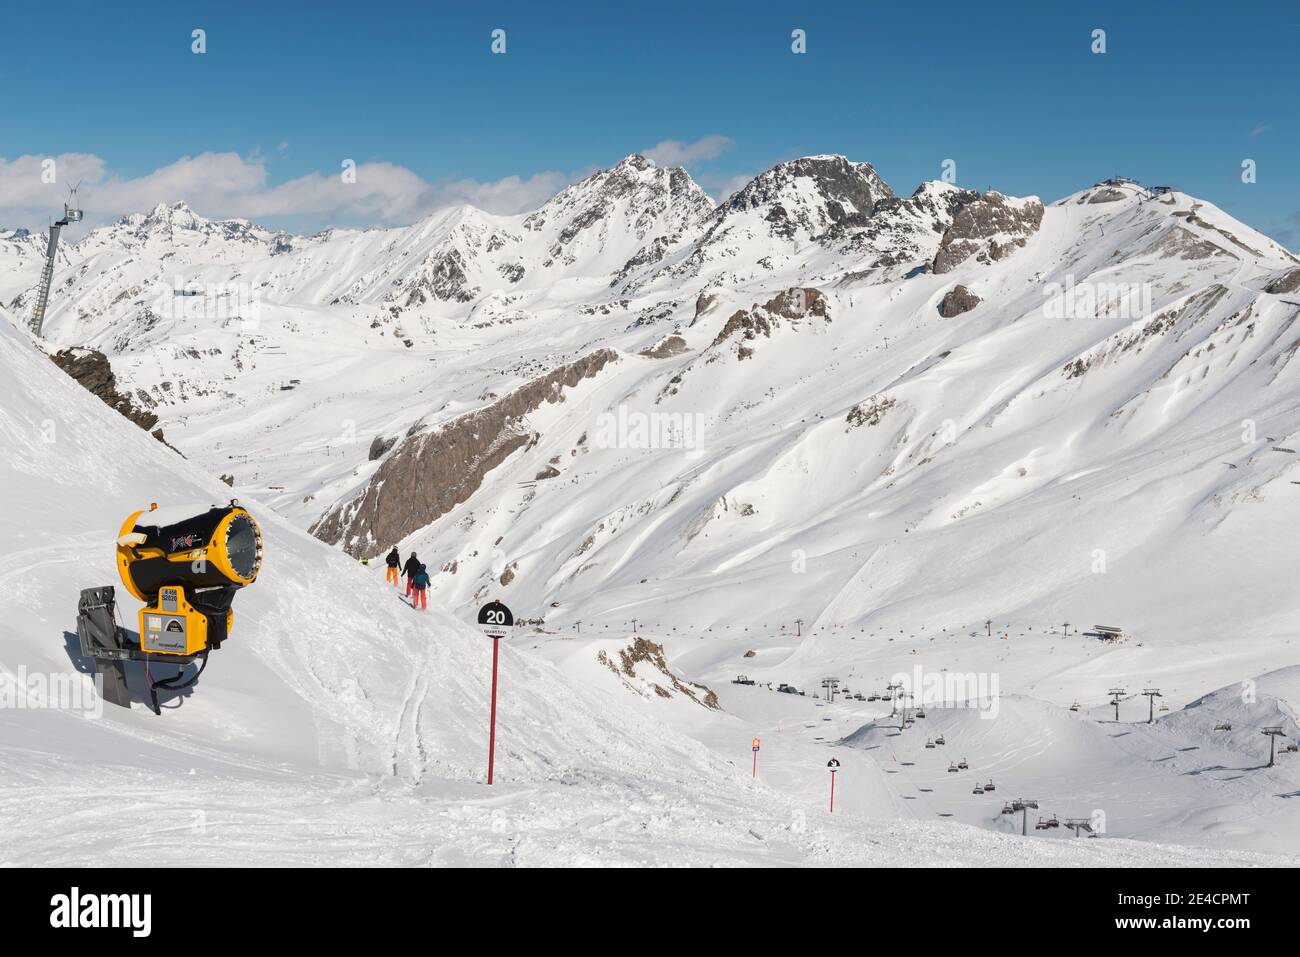 Europe, Autriche, Tyrol, Ischgl, domaine skiable de Palinkopf avec vue sur  Idalp, Lange Wand, Greitspitz, canon à neige, enneigement Photo Stock -  Alamy